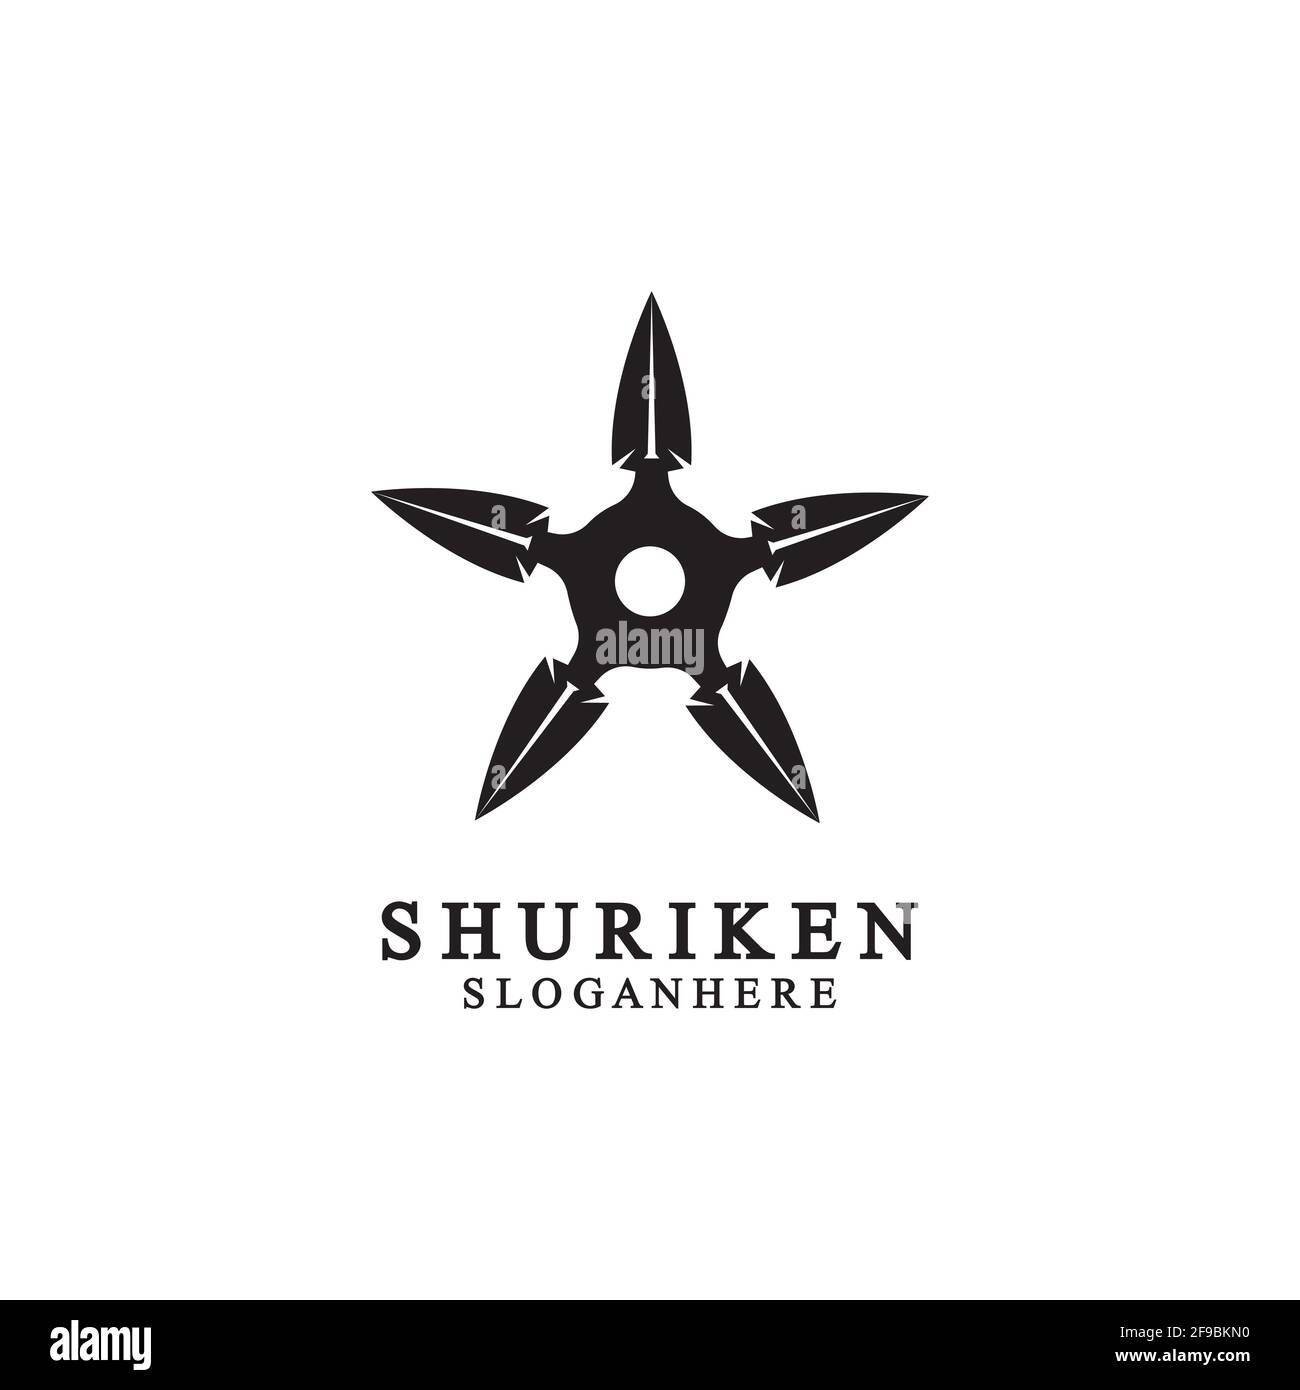 Shuriken Black and White Stock Photos & Images - Alamy